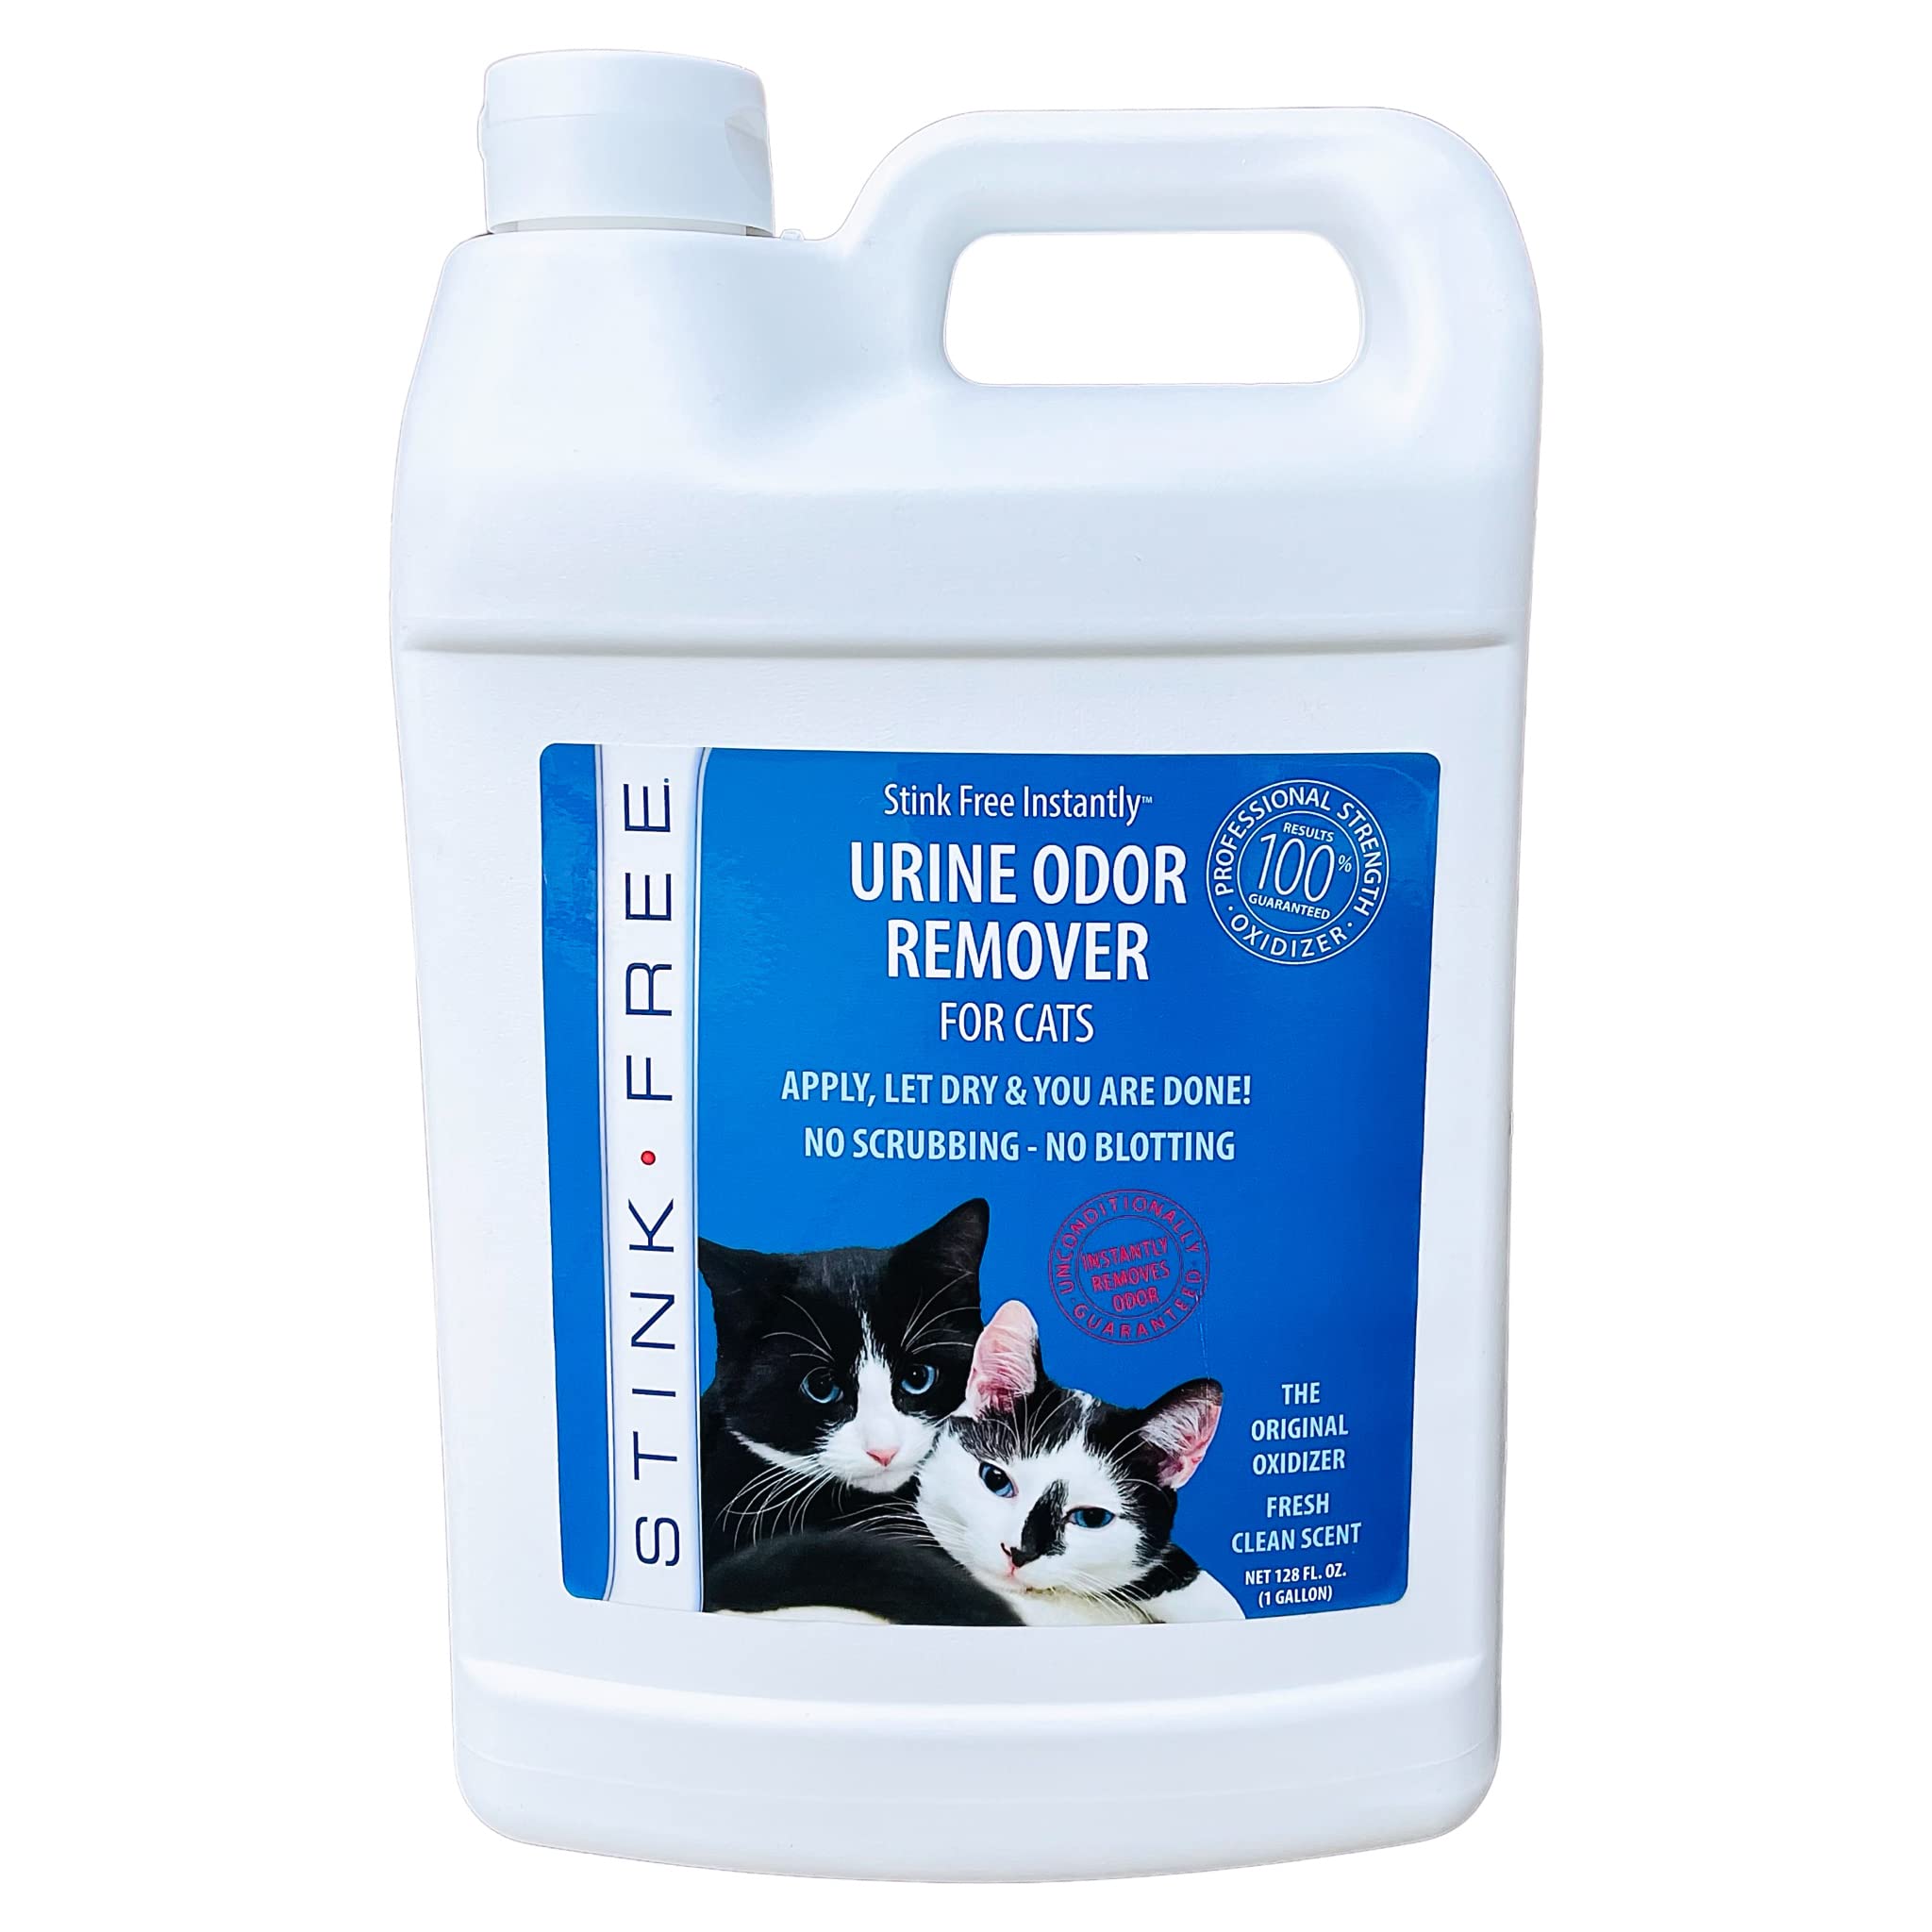 Stink Free Instantly Urine Odor Remover & Eliminator for cat Urine Oxidizer Based Urine cleaner for carpets Rugs Mattress etc. 1